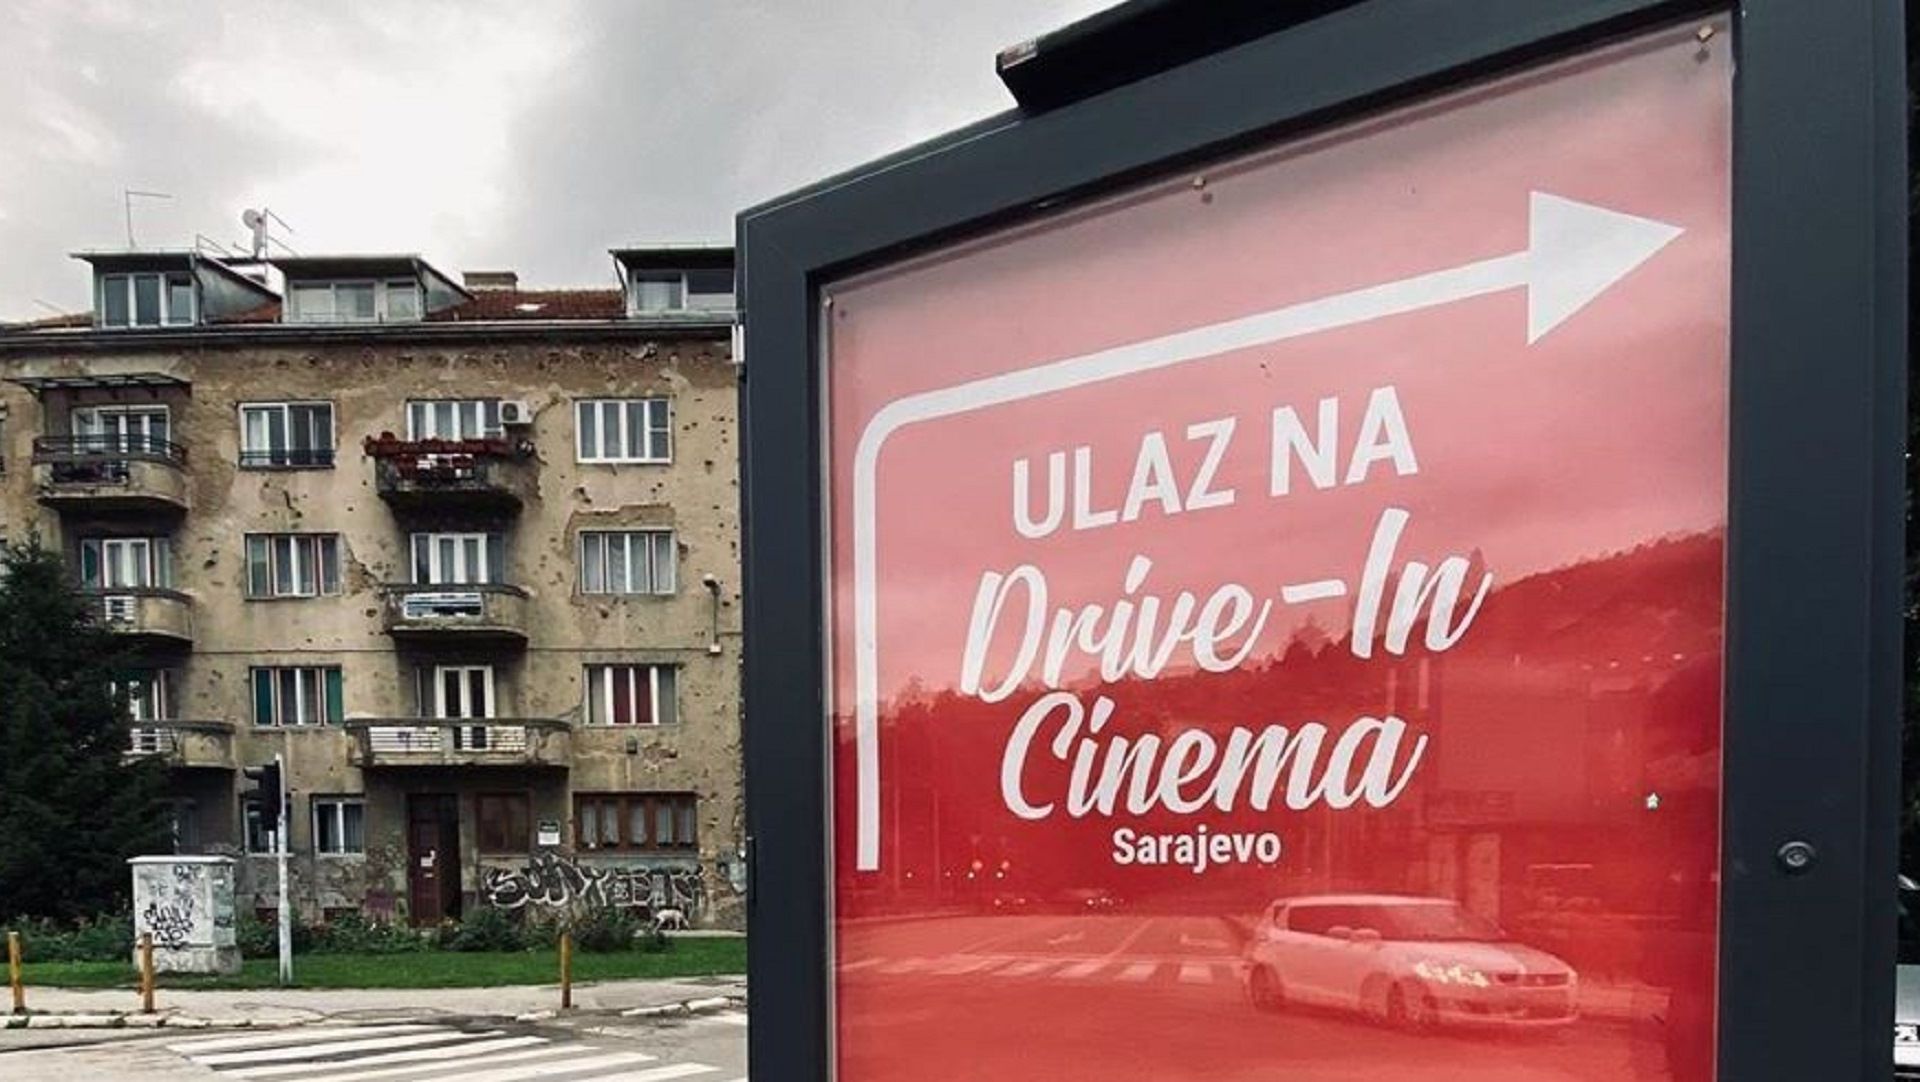 Drive-in cinema in Sarajevo from June 24 to 28 - Destination